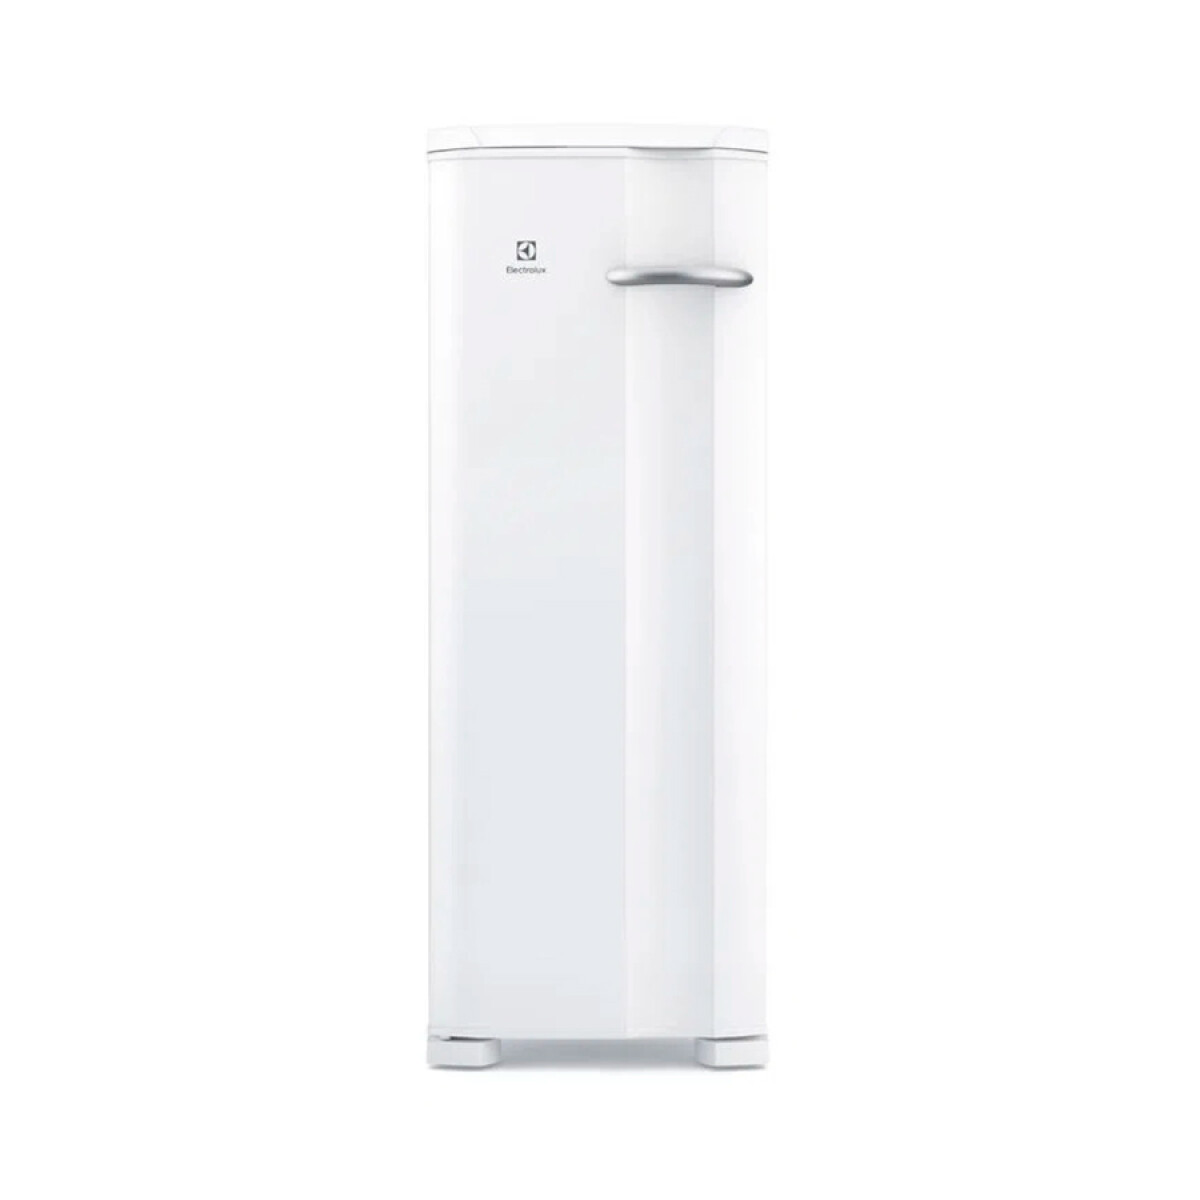 Freezer Electrolux vertical FE22 215 Lts 